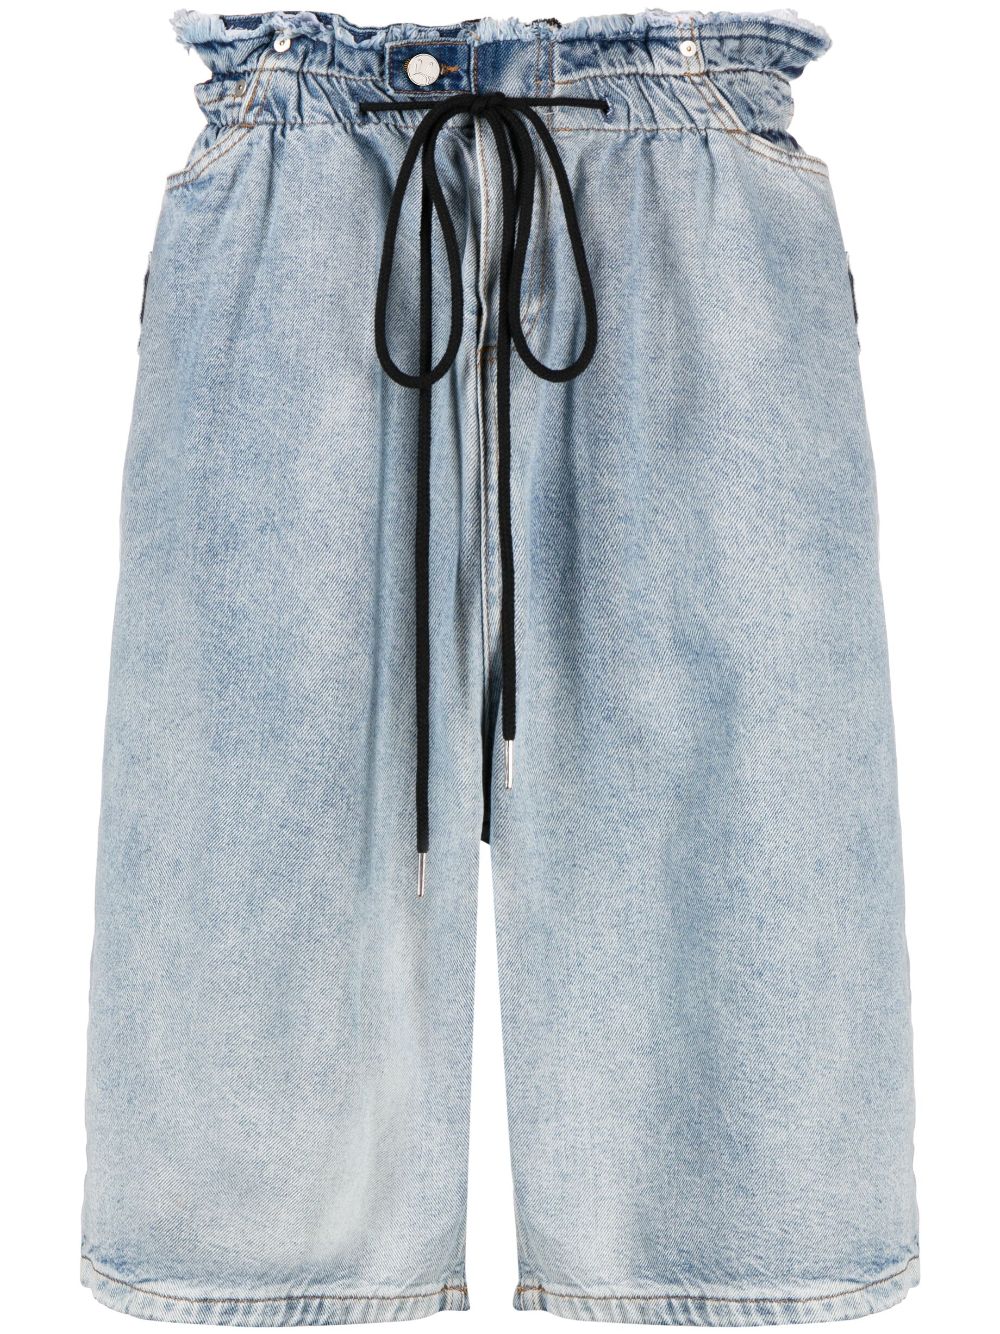 Natasha Zinko Jeans-Shorts mit Gürtel - Blau von Natasha Zinko